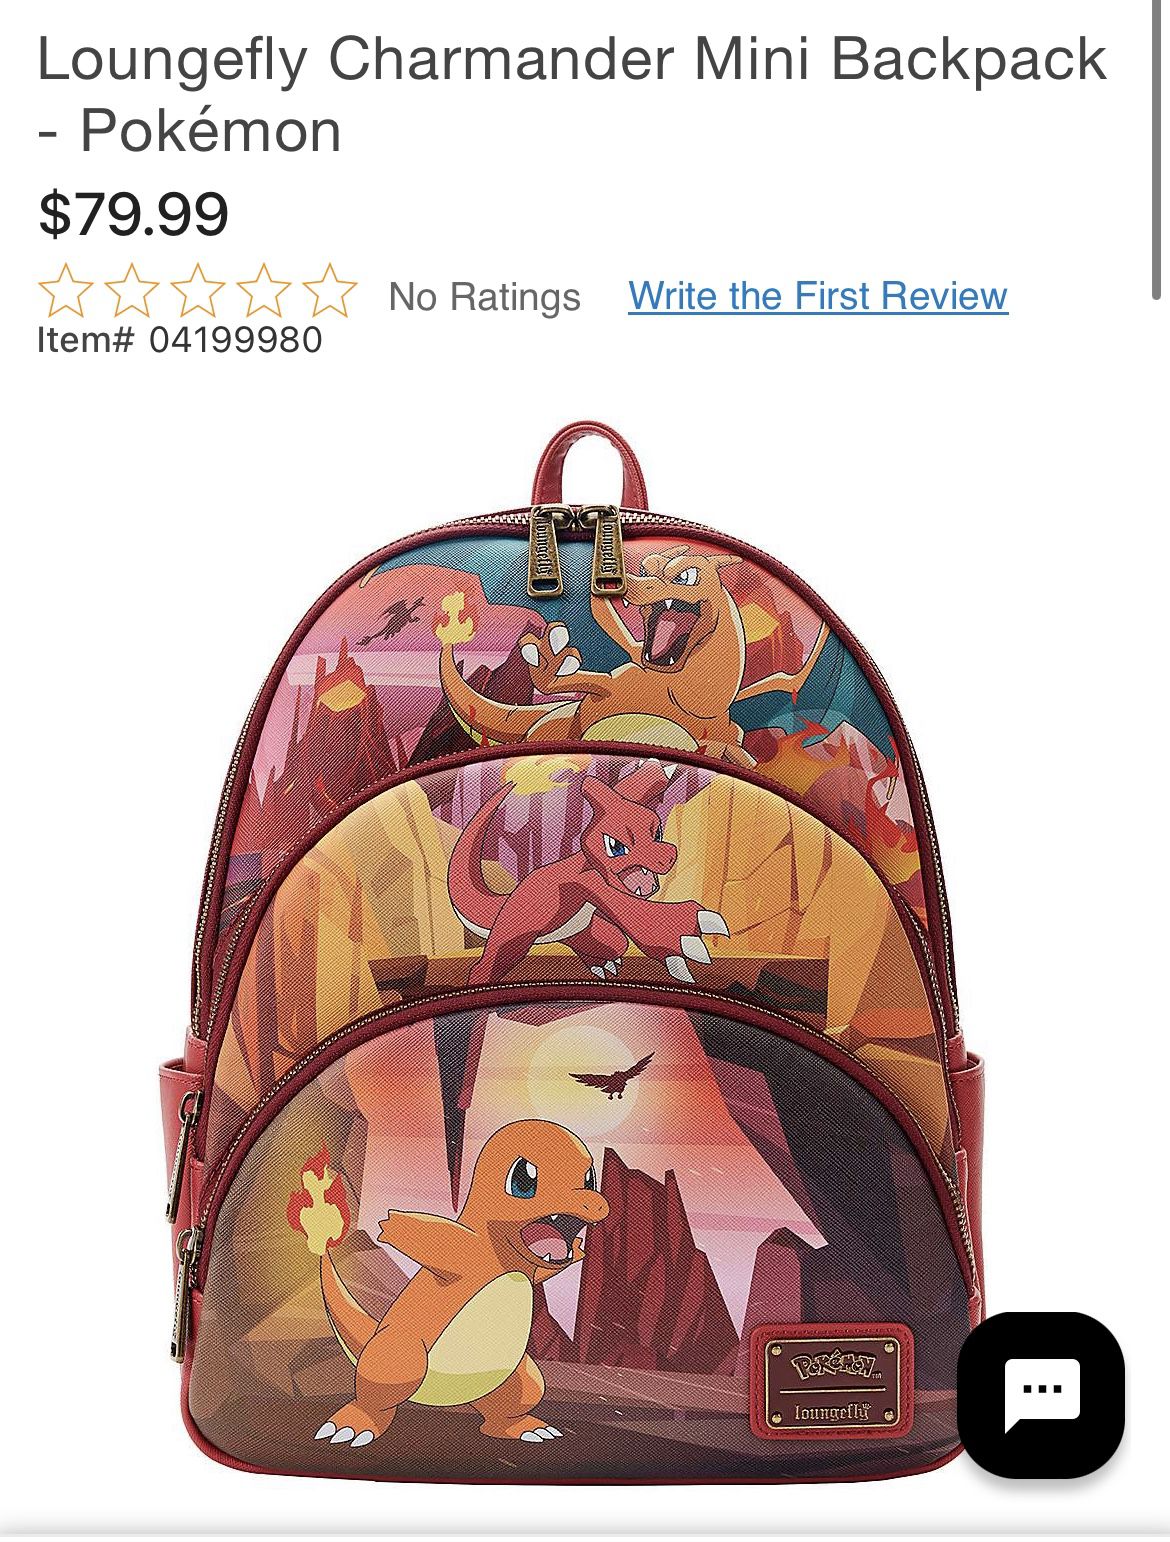 Pokémon Loungefly Backpack Charizard